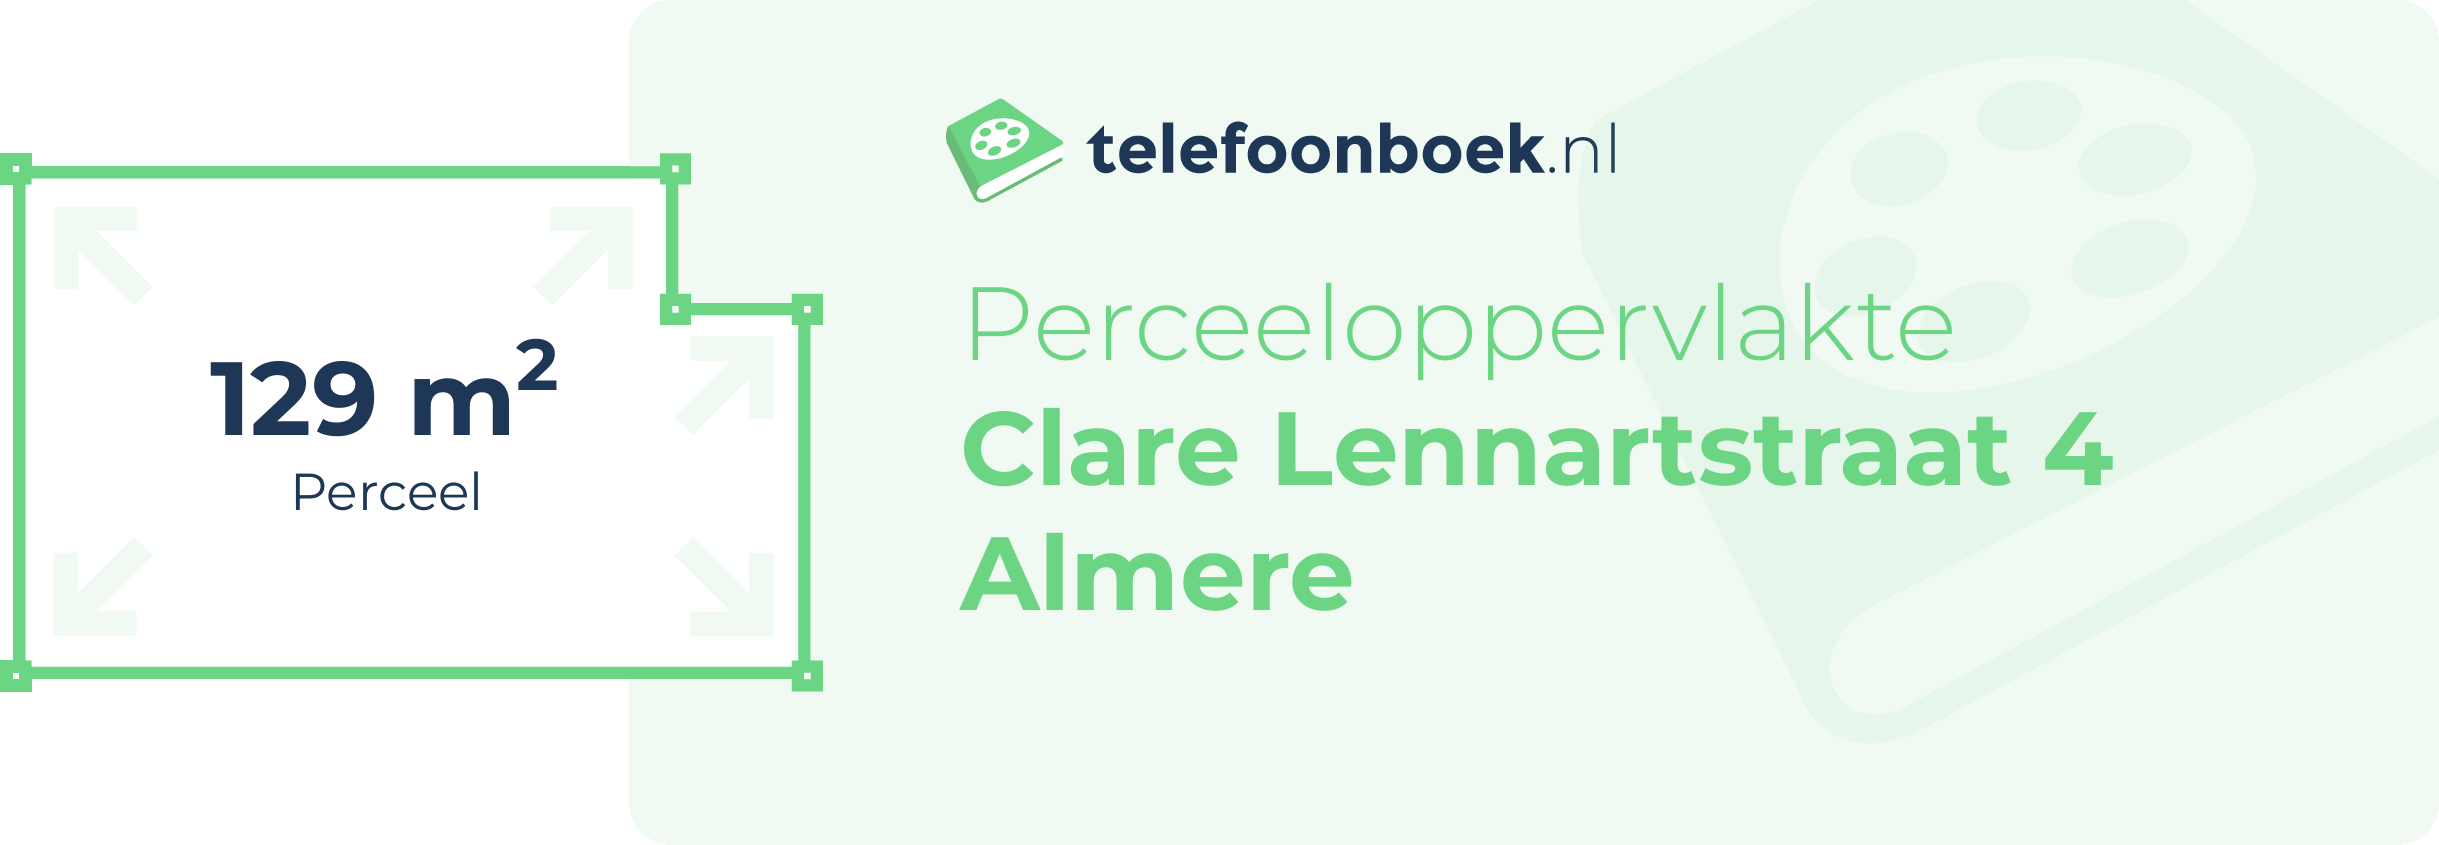 Perceeloppervlakte Clare Lennartstraat 4 Almere